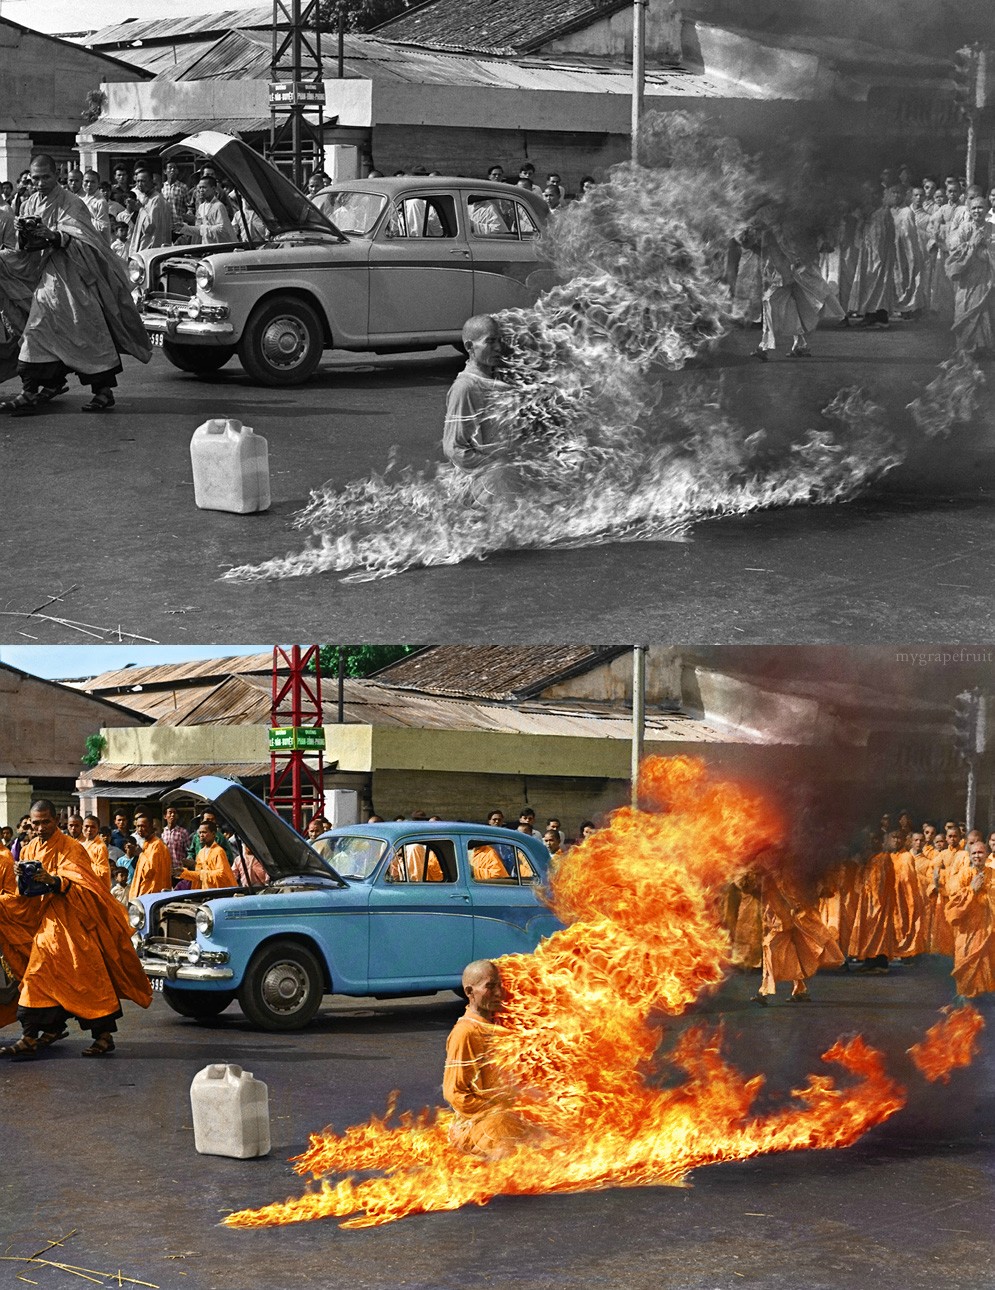 The Burning Monk